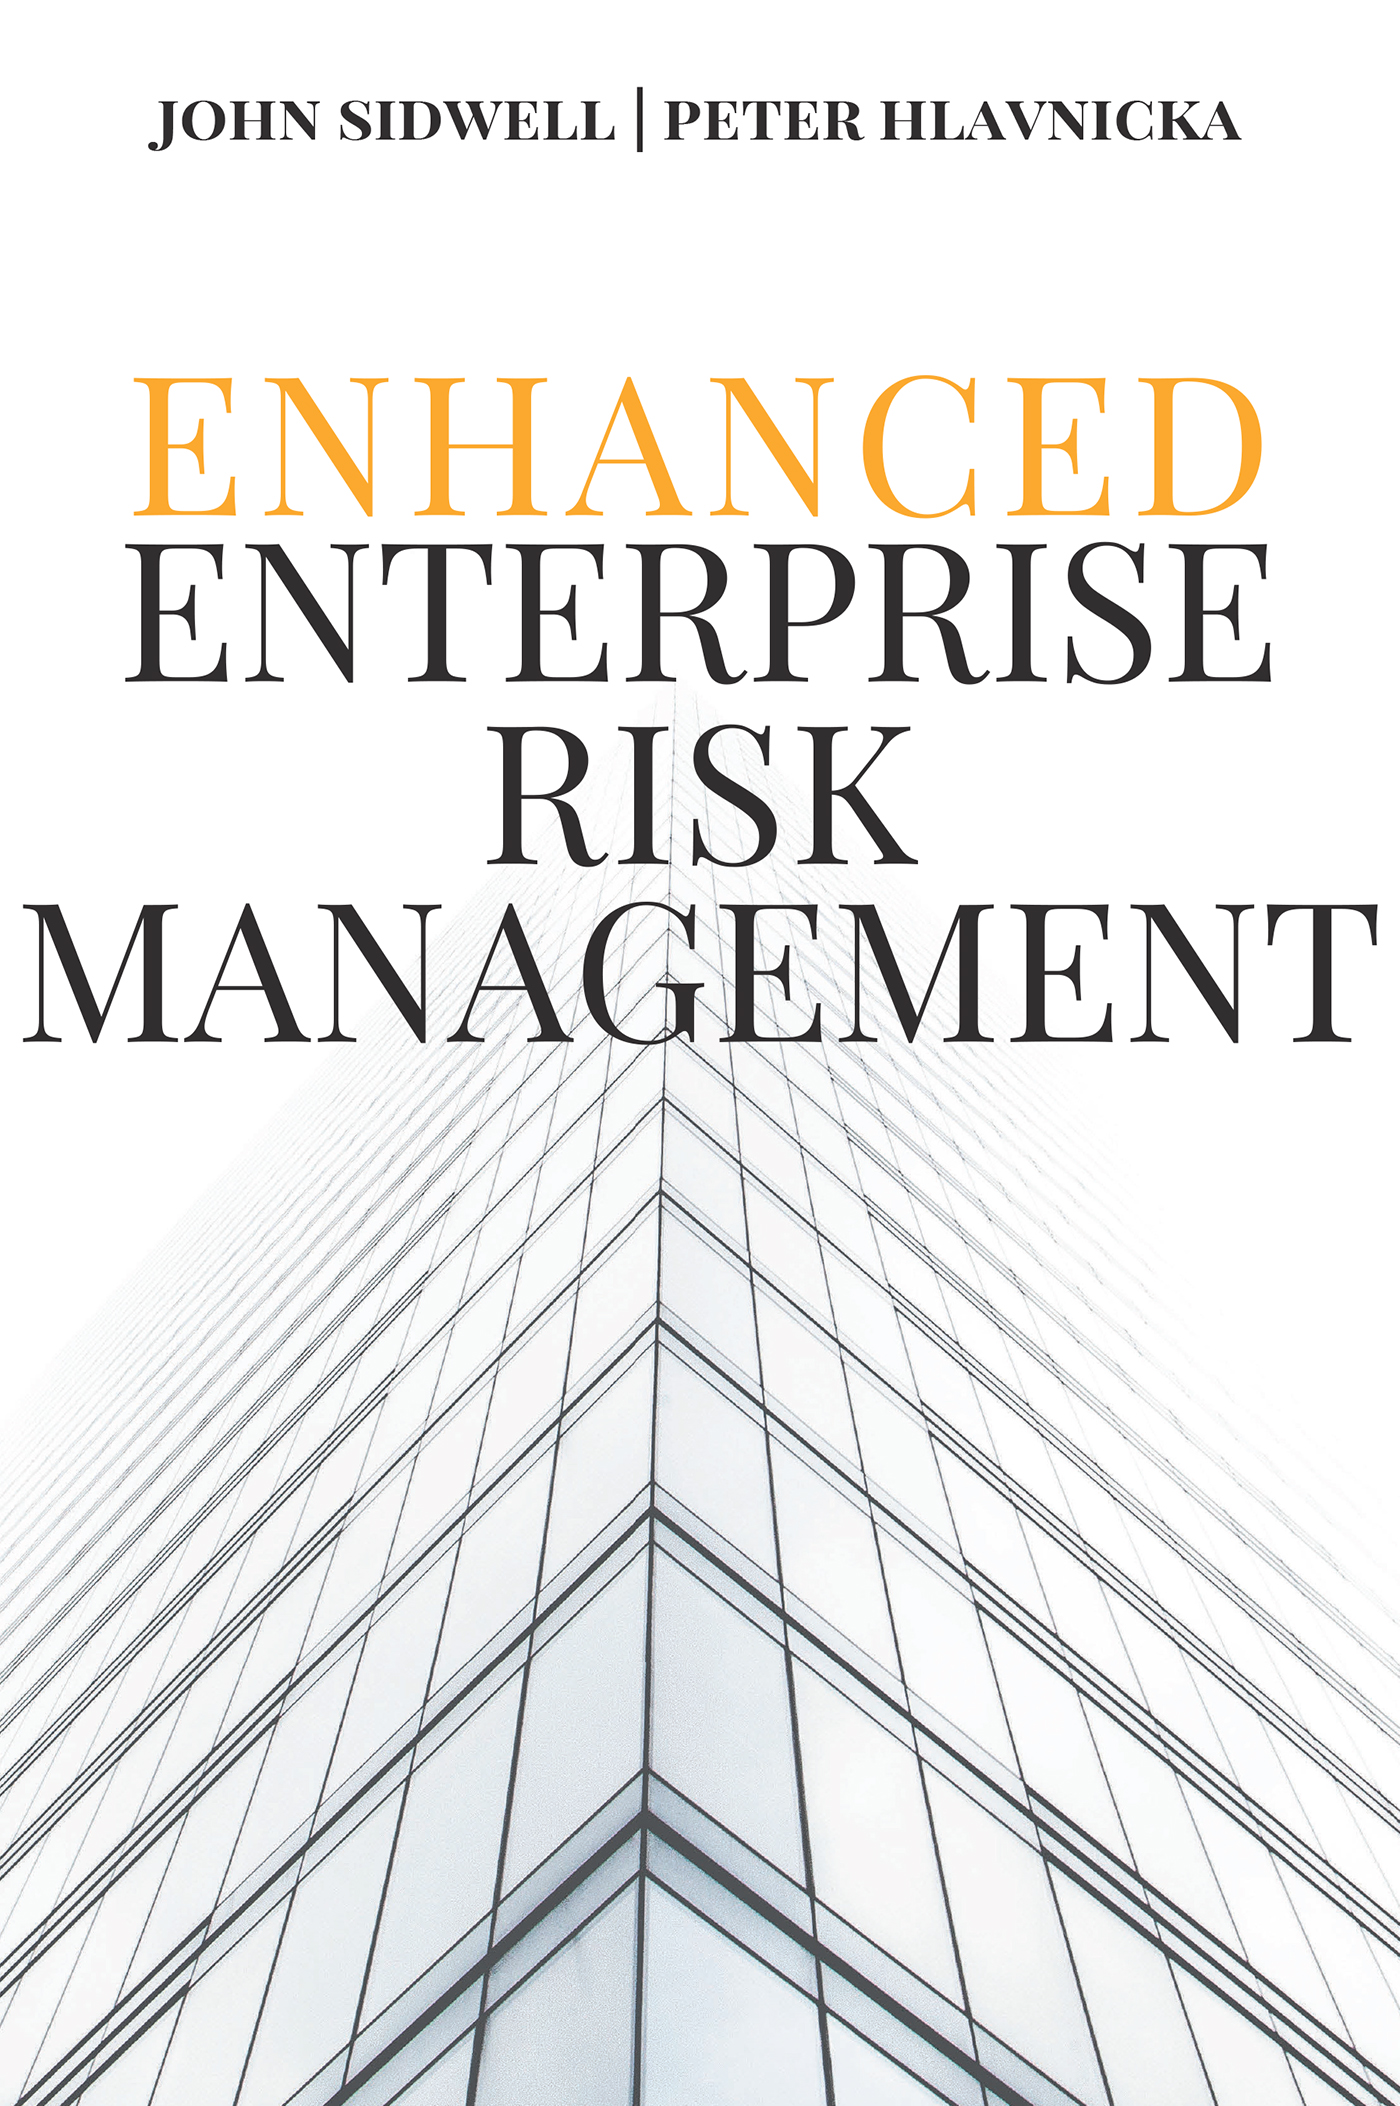 Enhanced Enterprise Risk Management